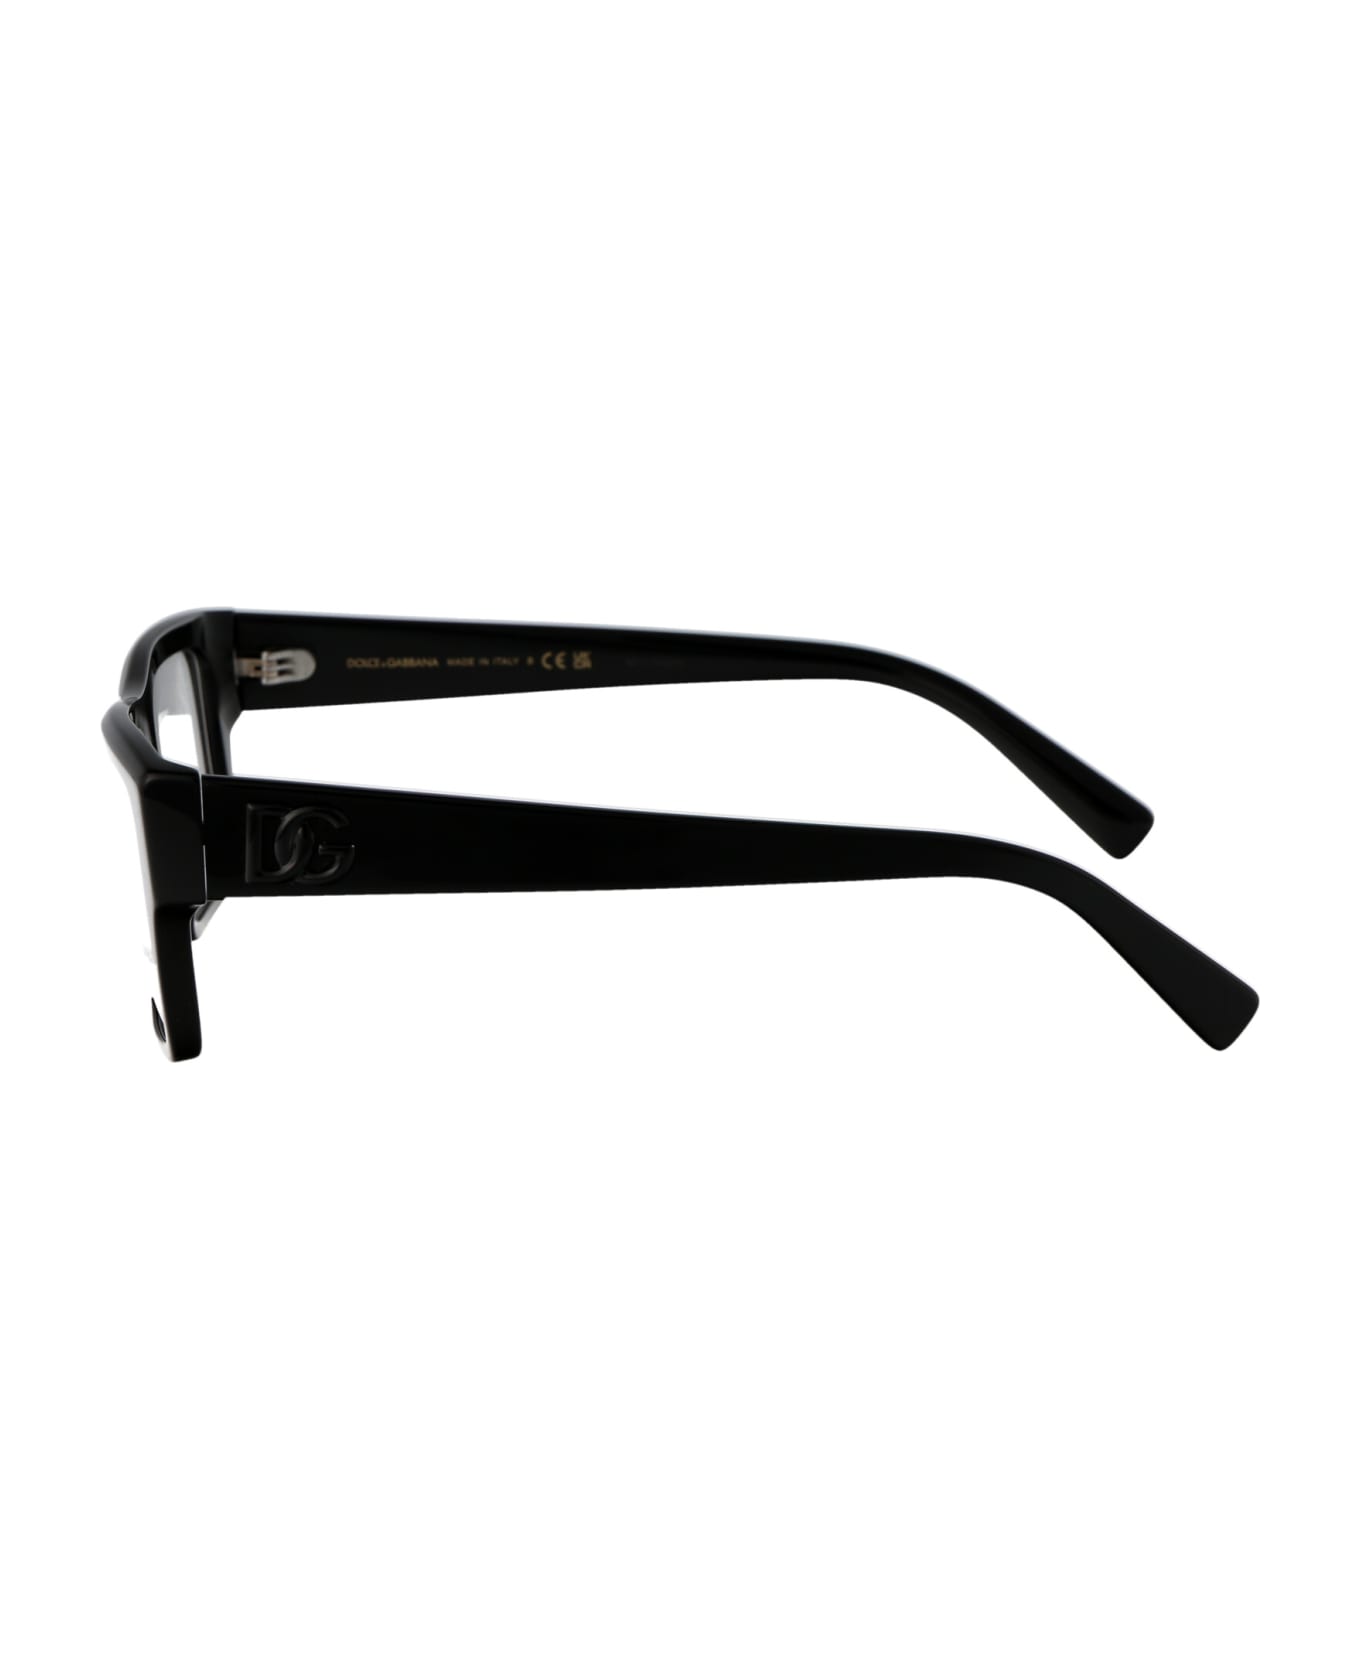 Dolce & Gabbana Eyewear 0dg3382 Glasses - 501 BLACK アイウェア